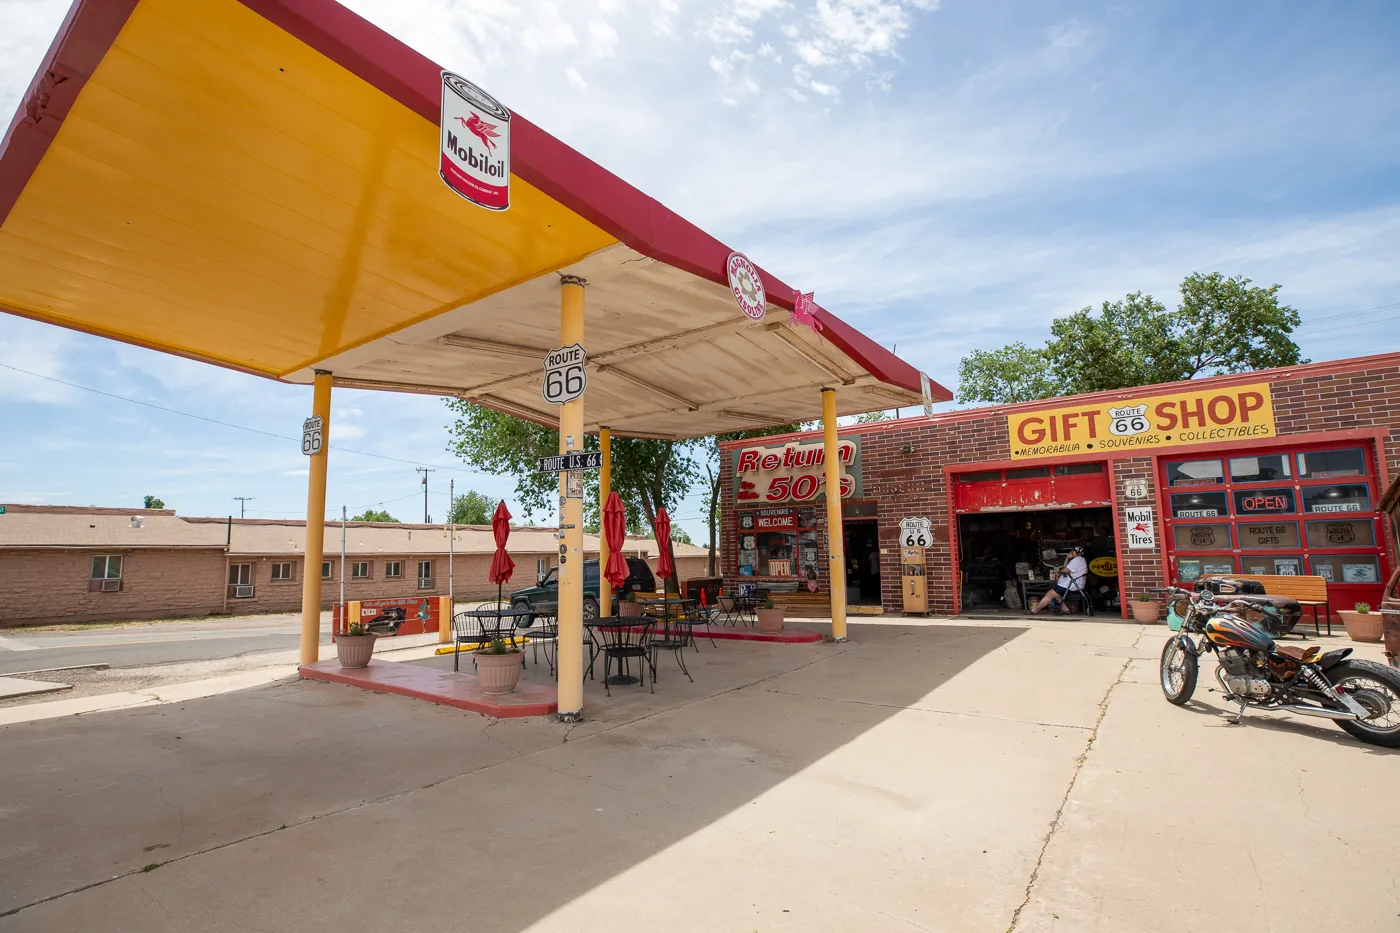 Return to the 50's Gift Shop in Seligman, Arizona